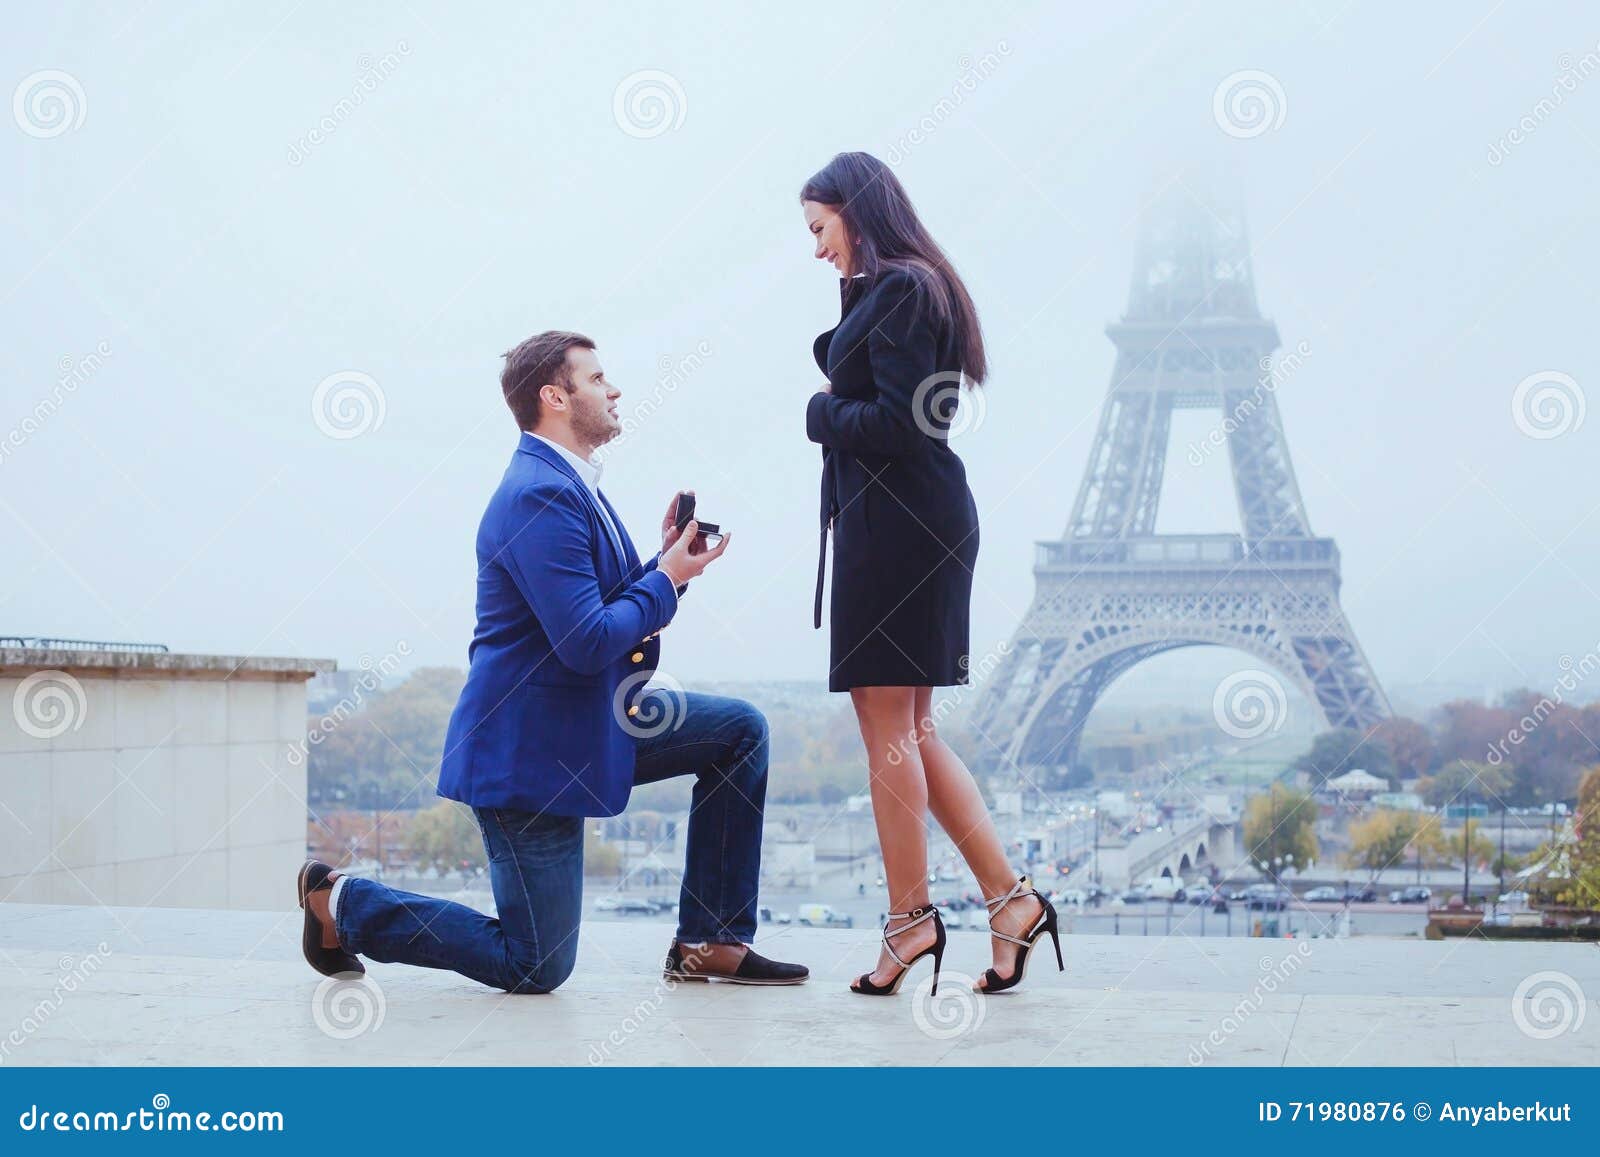 marry me, proposal in paris, engagement